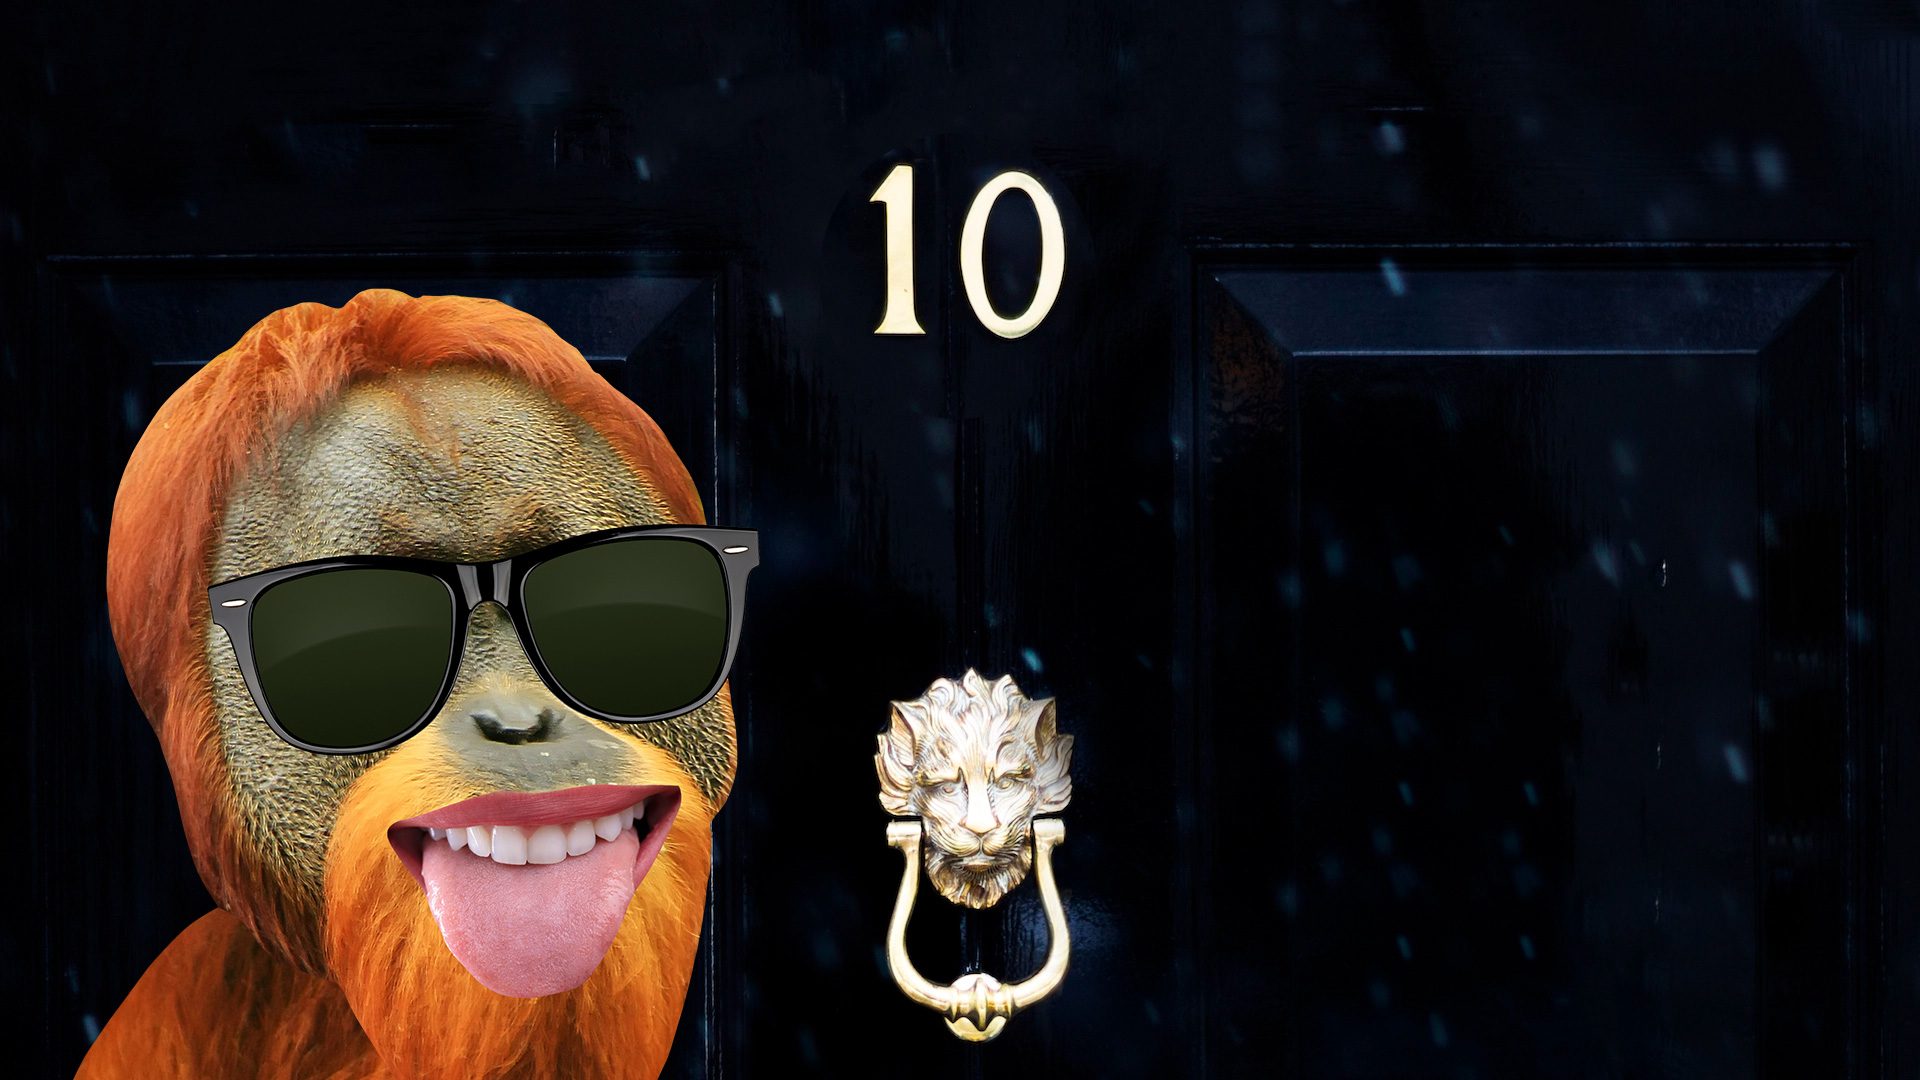 An orangutan about to knock on 10 Downing Street's door